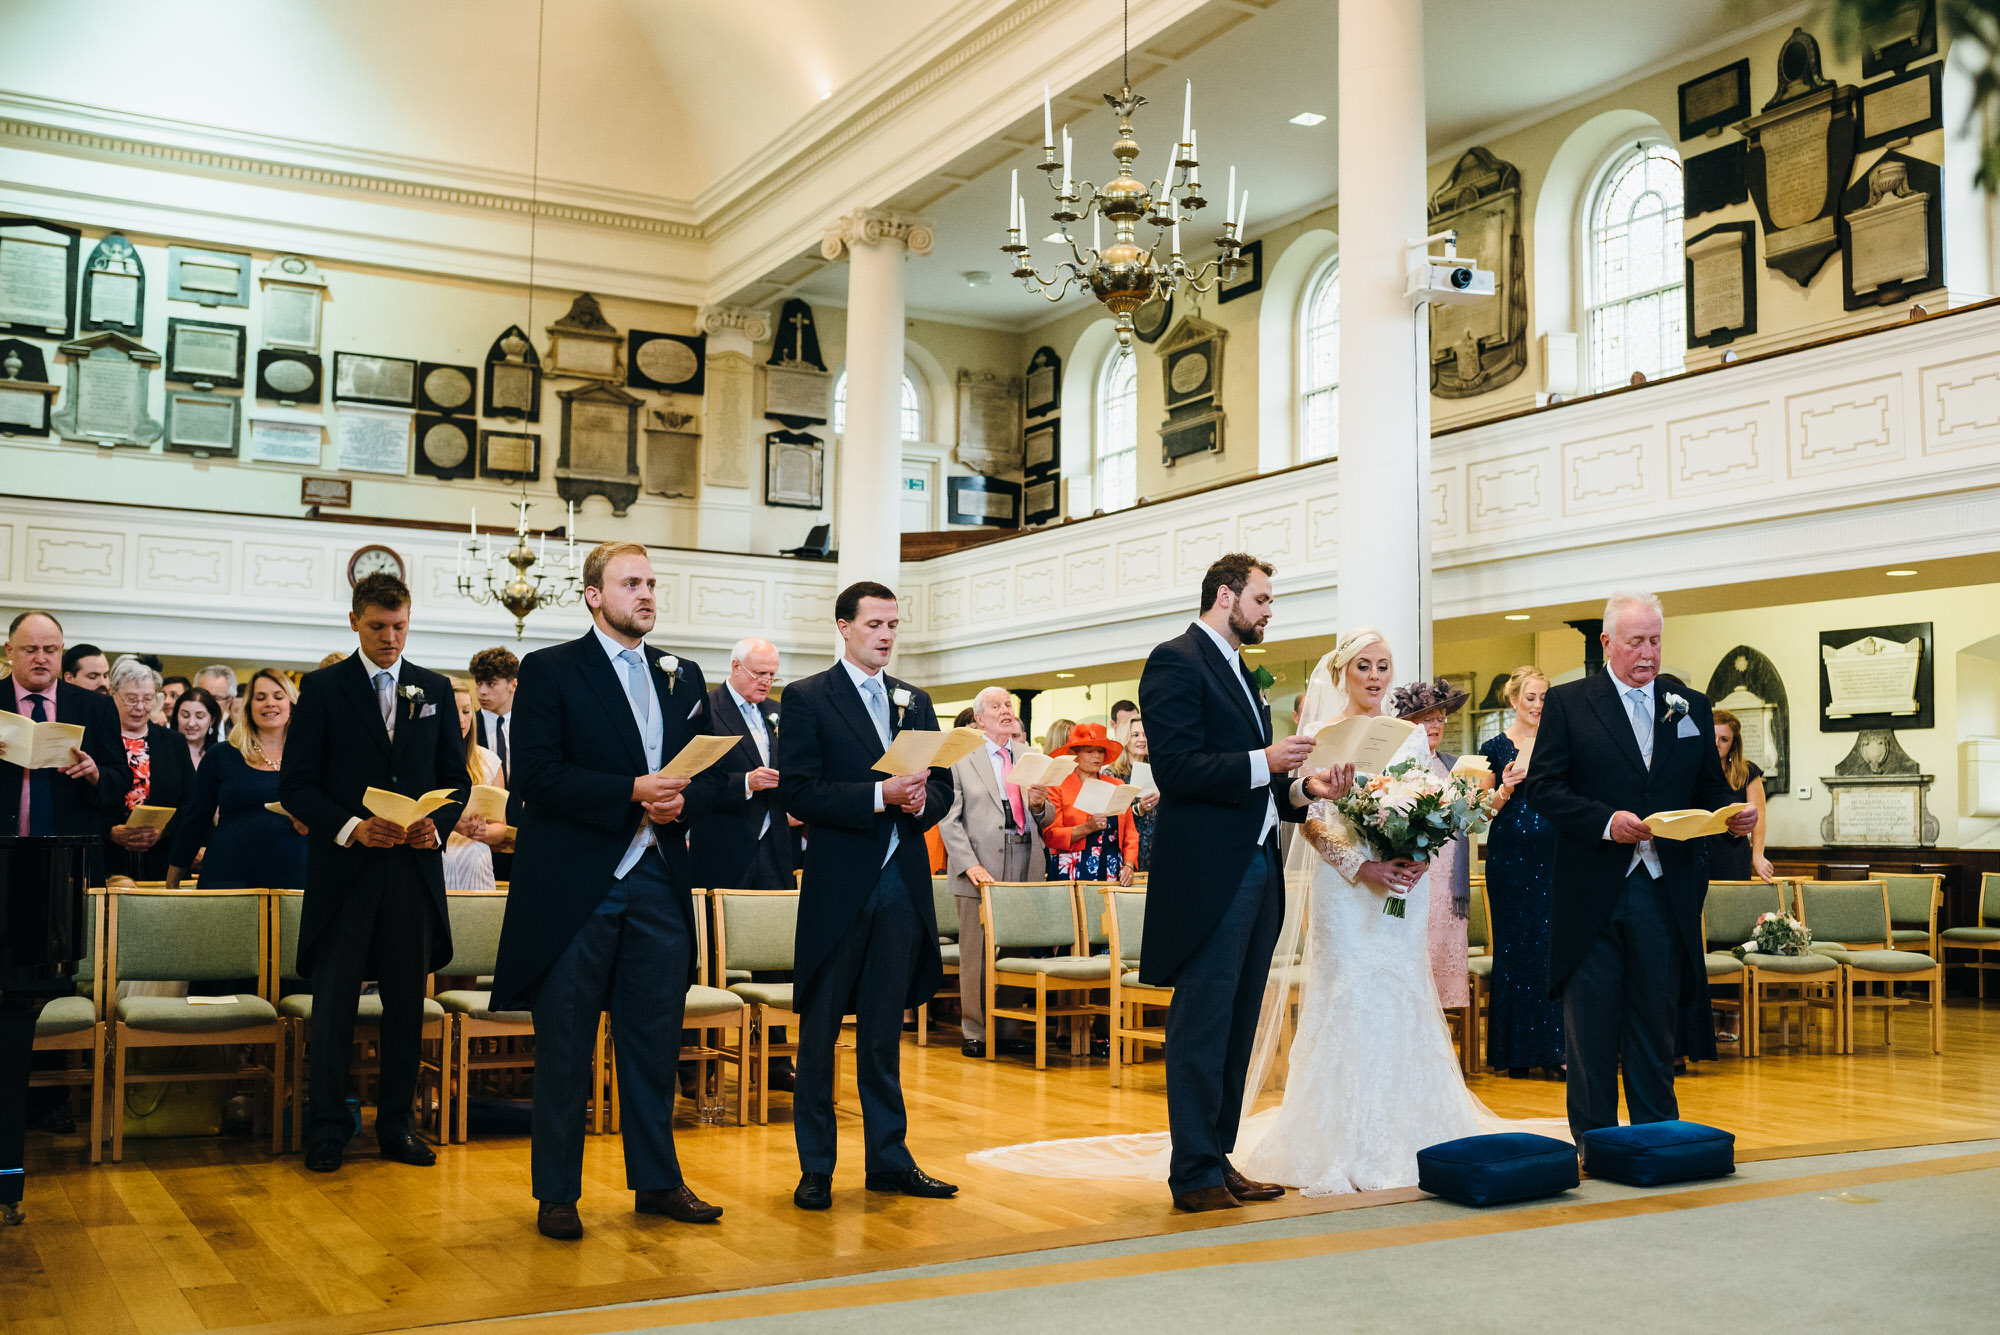 St Swithins Church wedding ceremony 